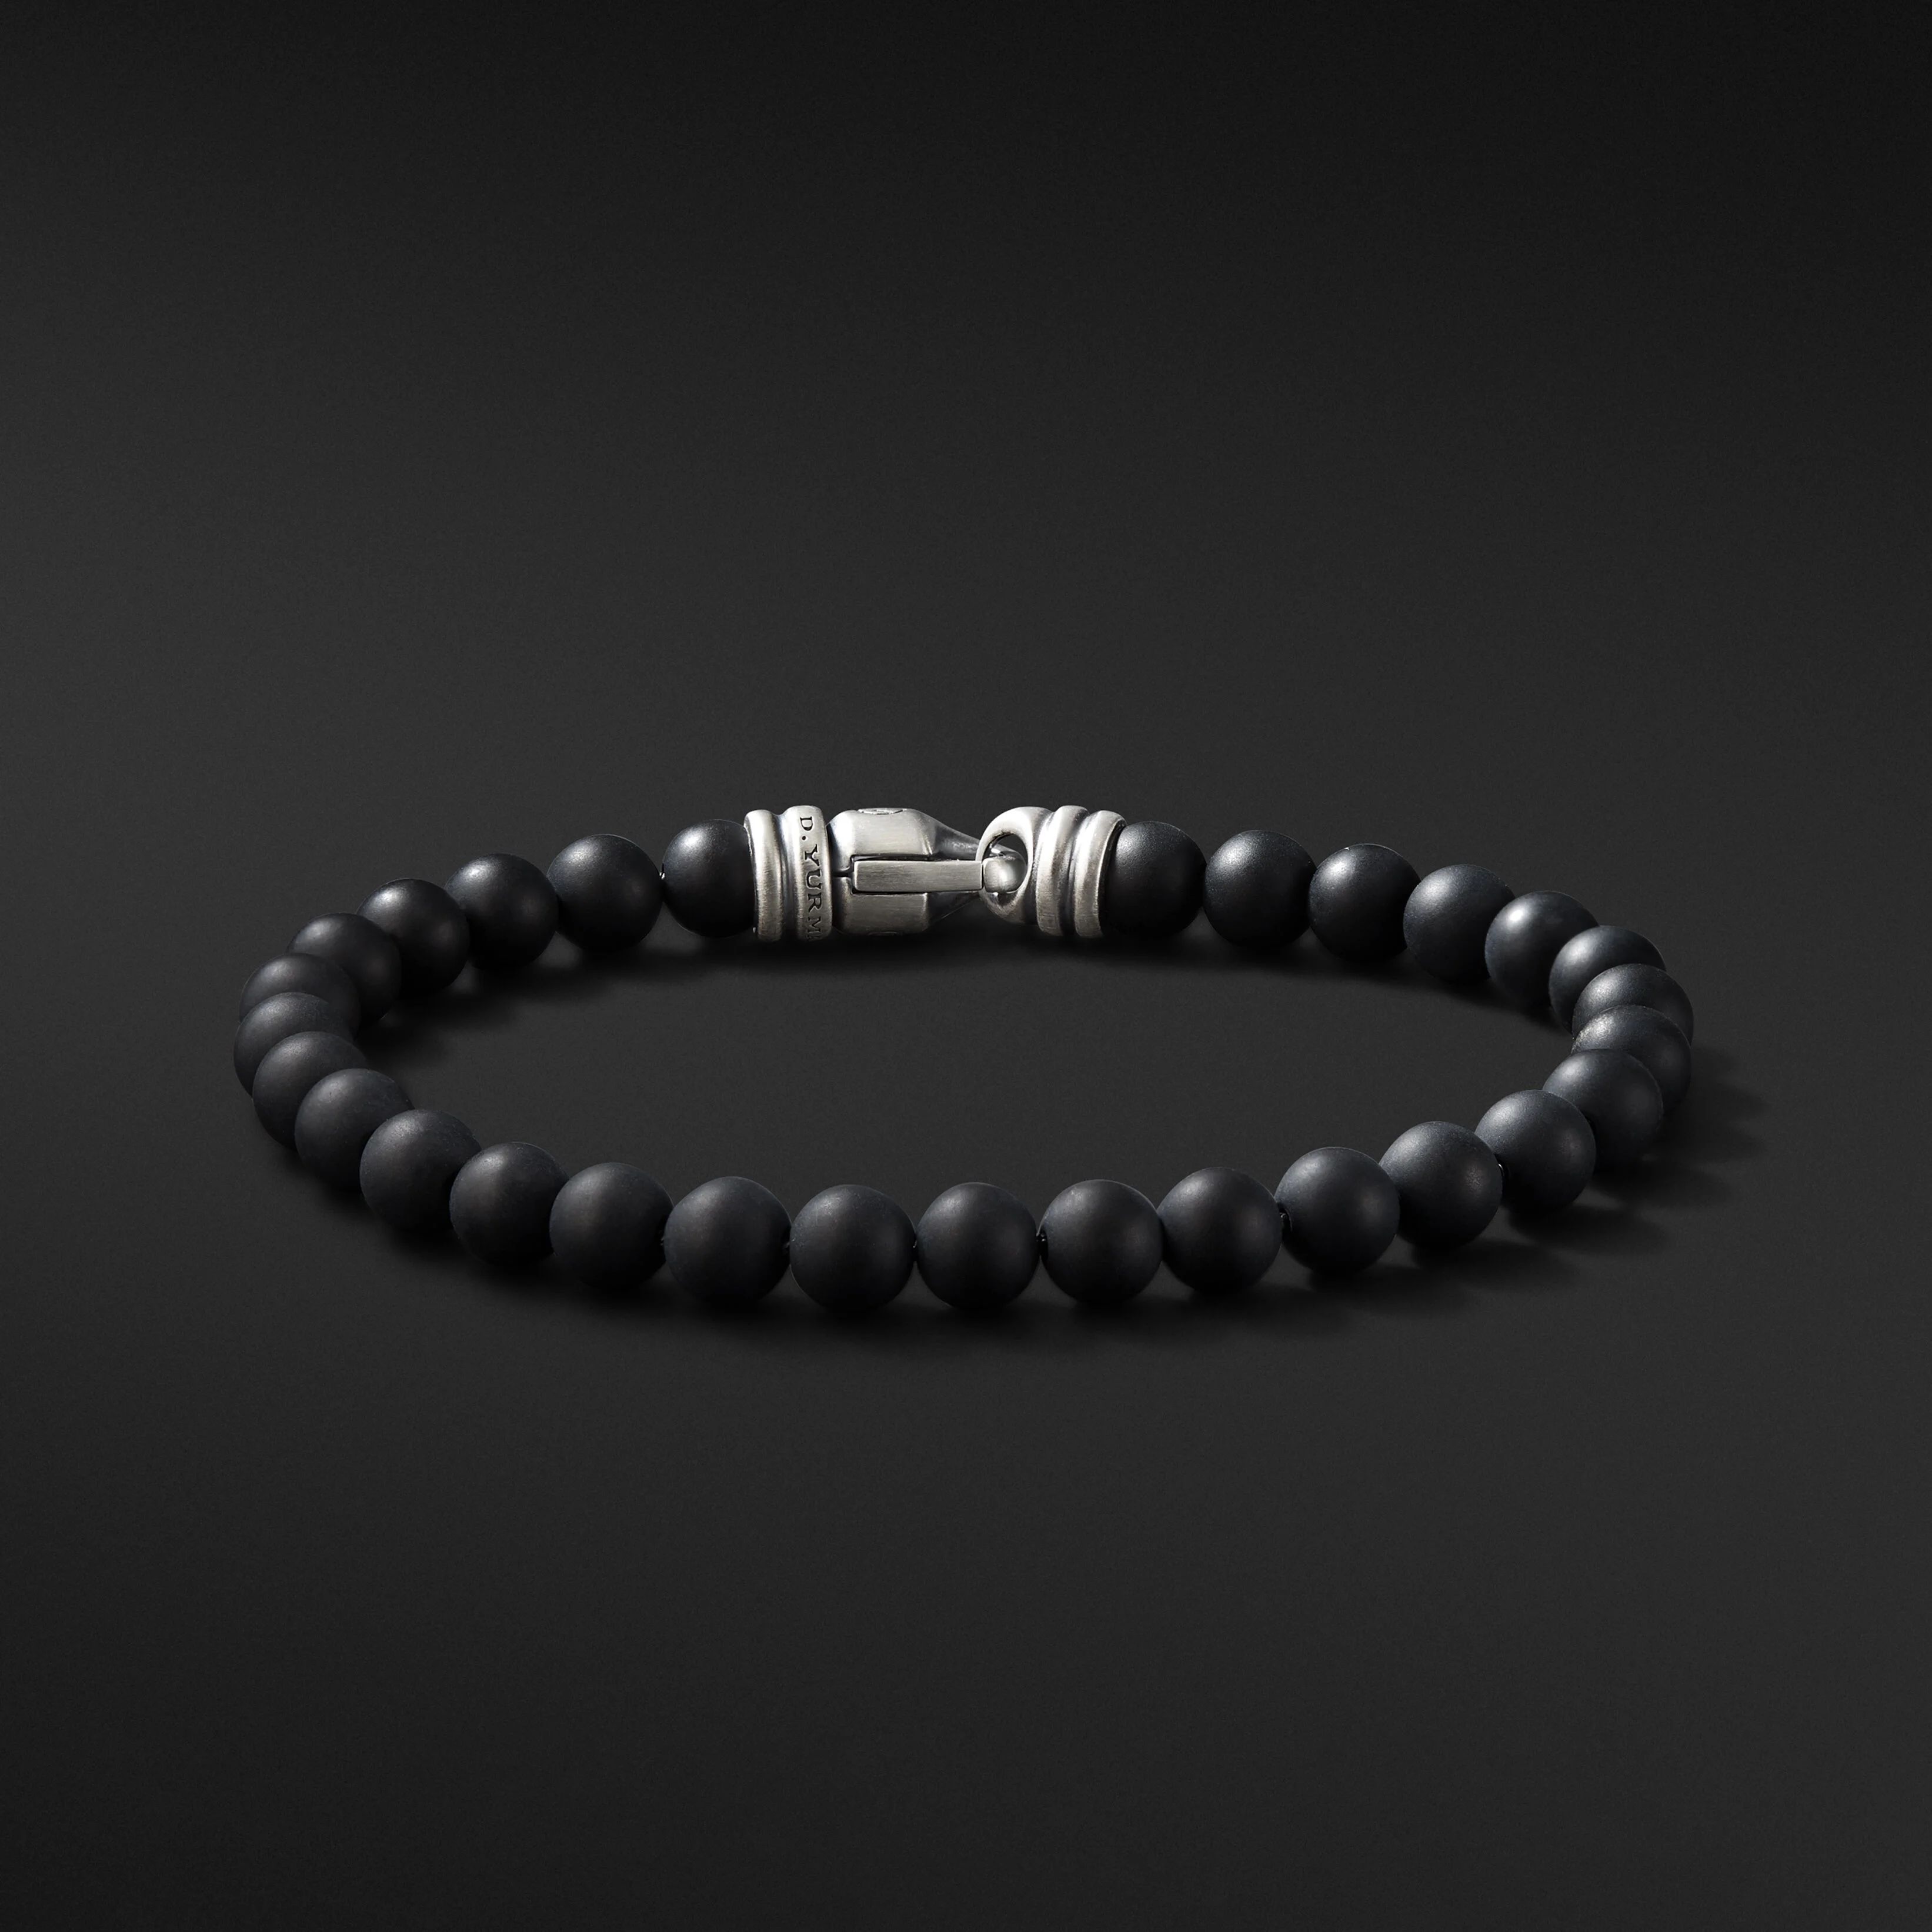 Spiritual Beads Bracelet in Sterling Silver with Black Onyx | David Yurman